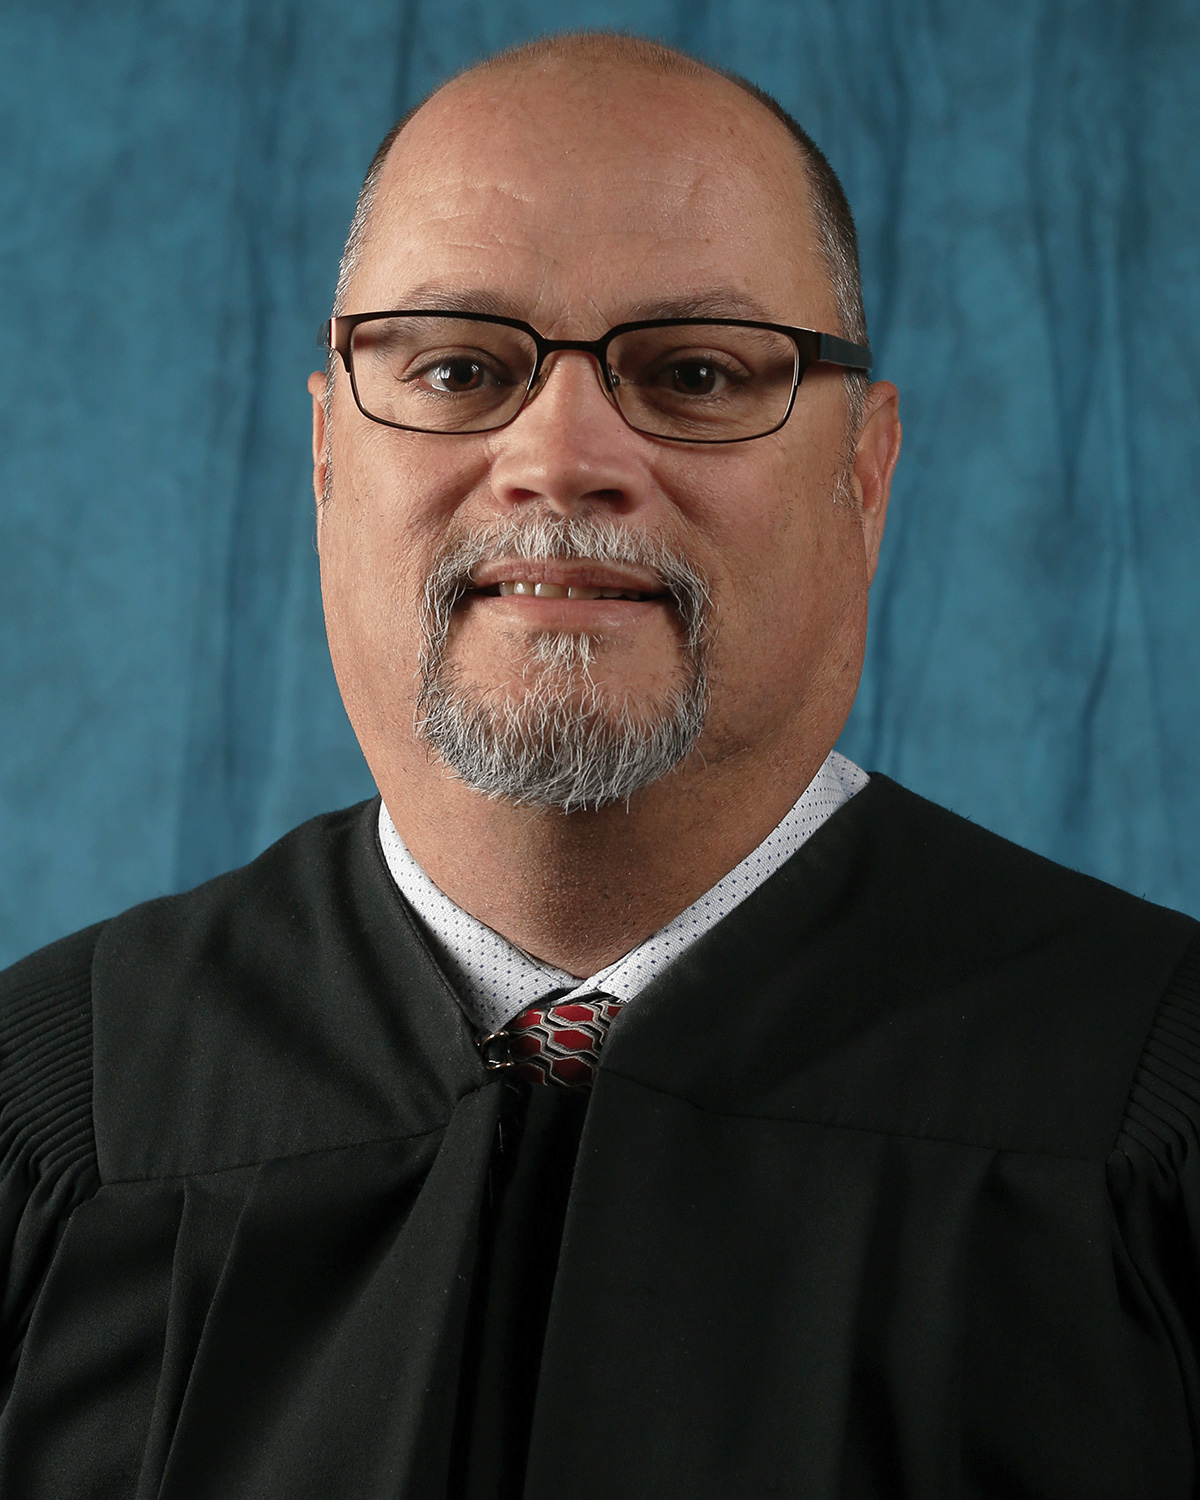 Judge Greg Perry